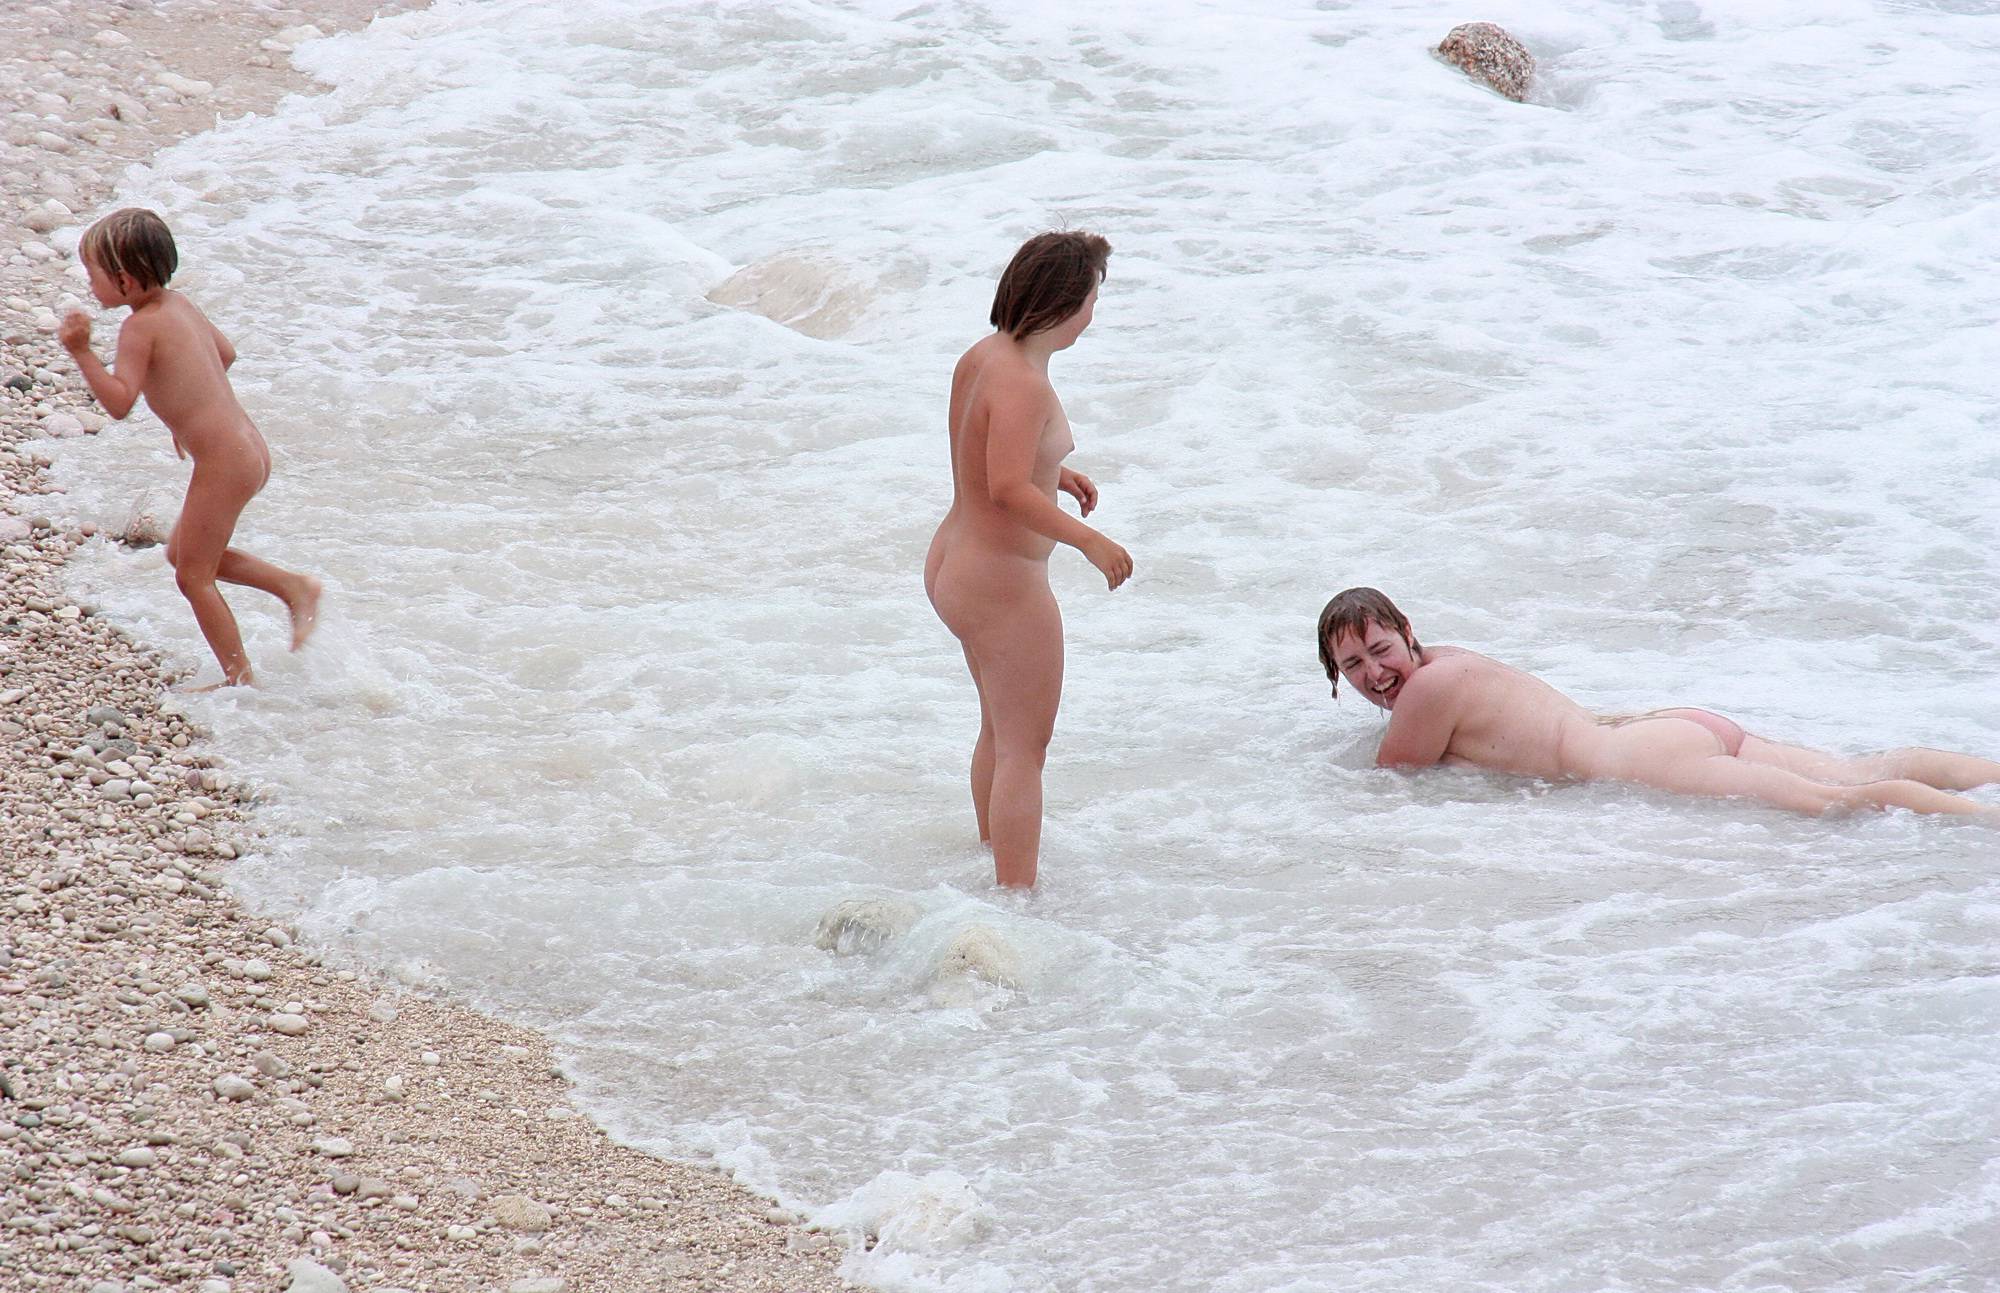 Nudist Pictures Wading In Coastal Waves - 2